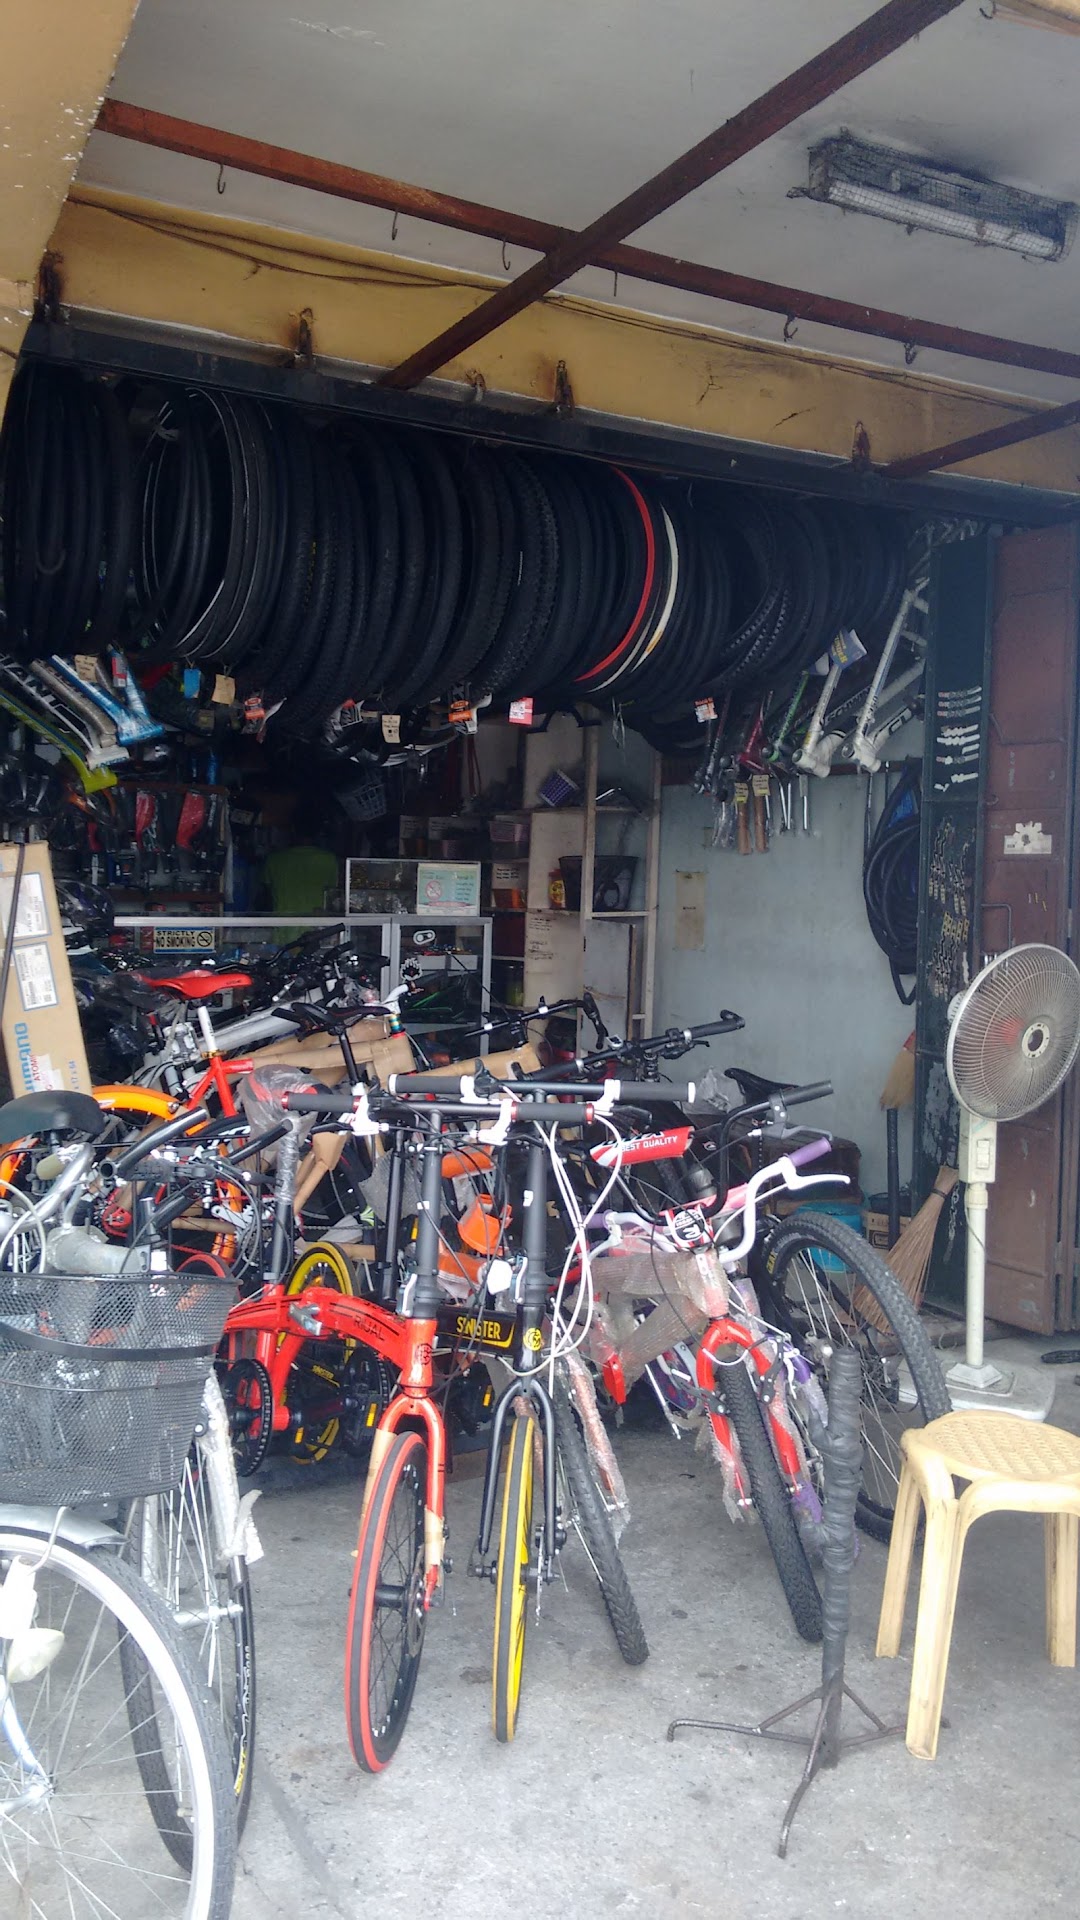 Used to be Berea Bike Shop